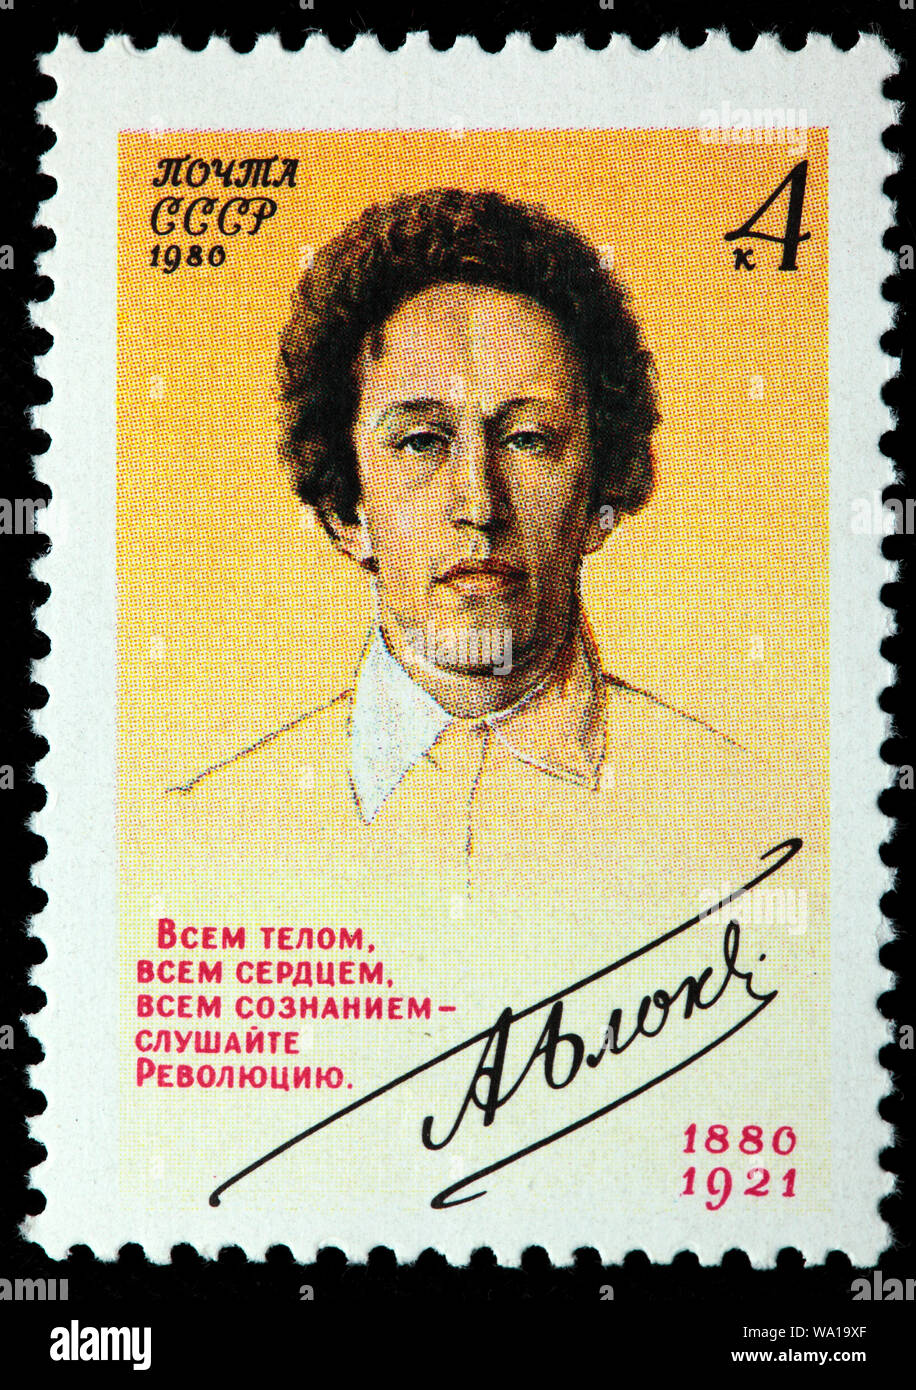 Alexander Blok (1880-1921), Russian lyrical poet, postage stamp, Russia, USSR, 1980 Stock Photo